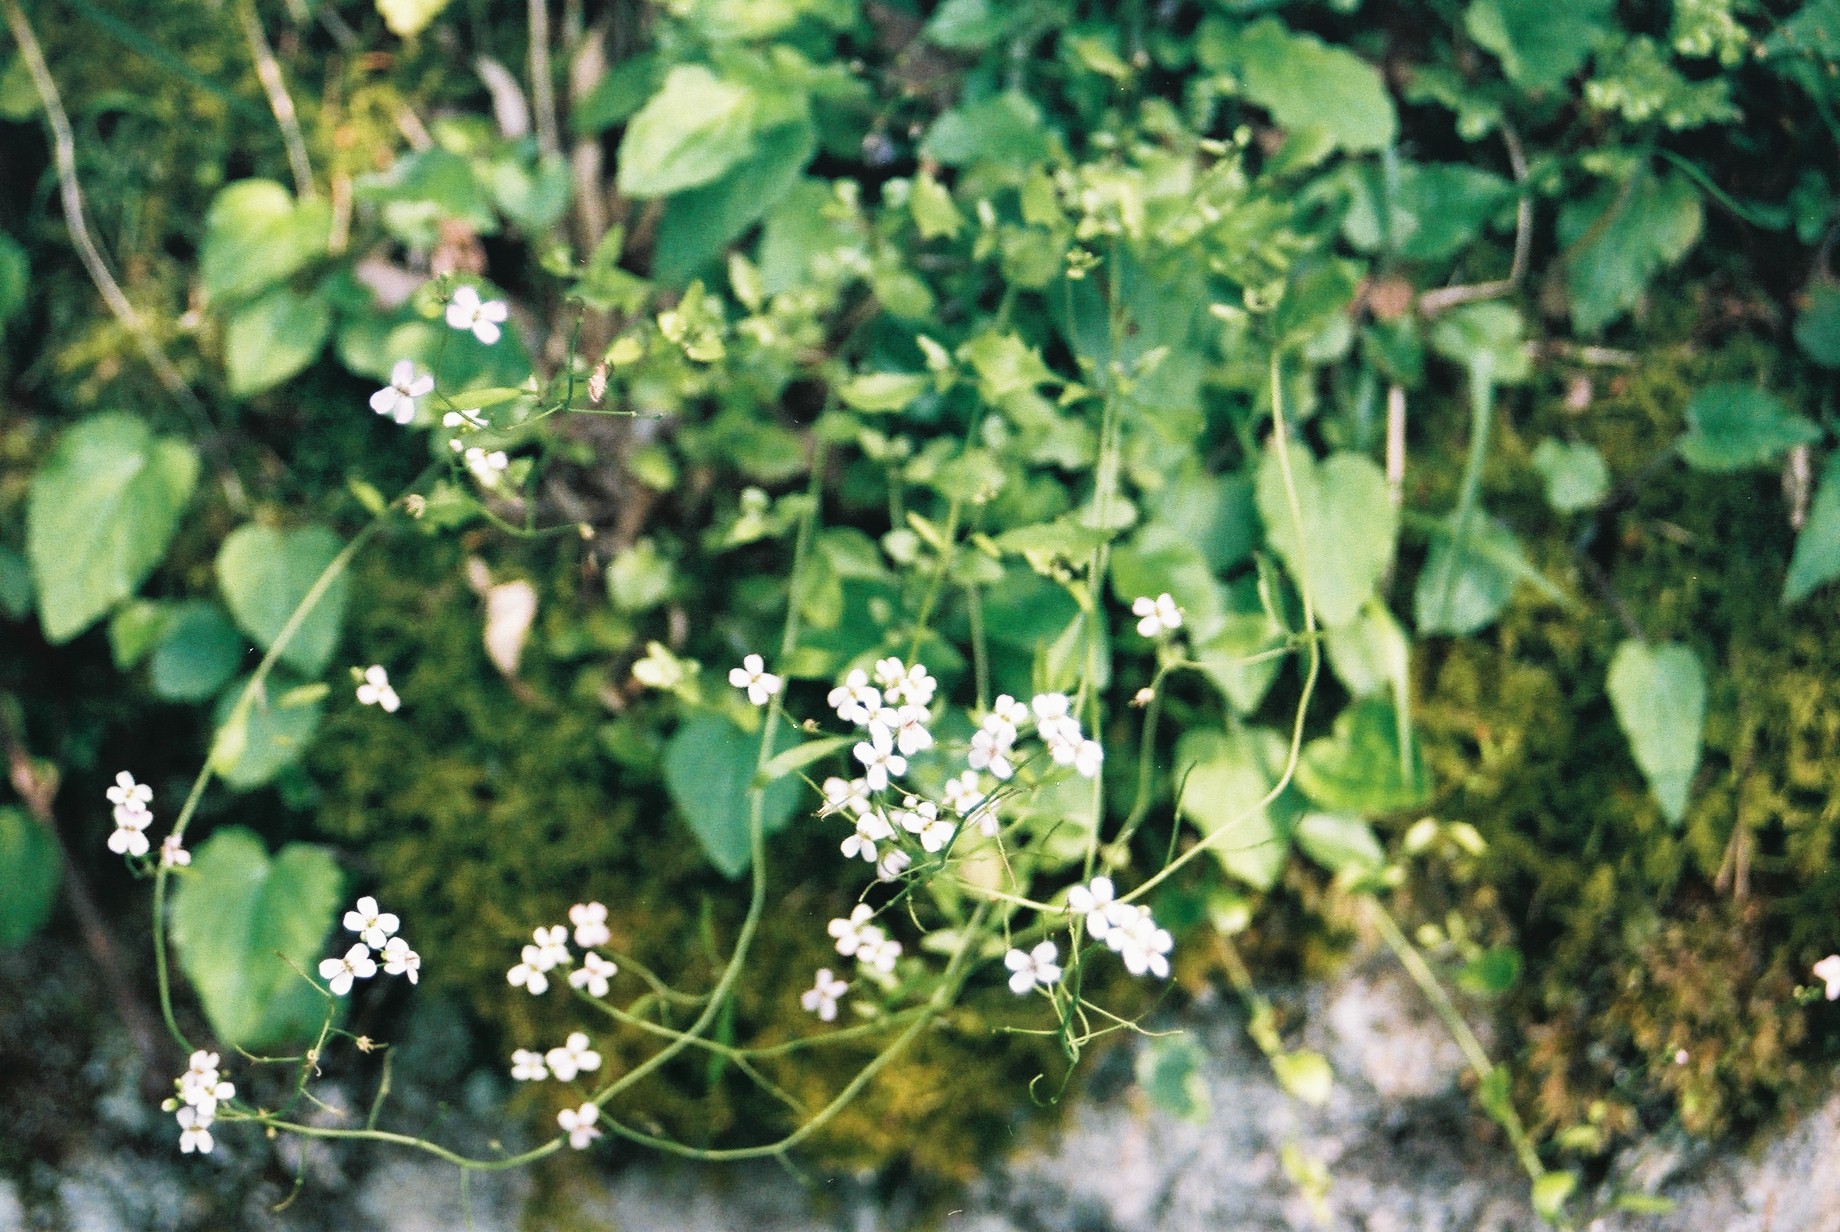 Tiny white colored flowers in daylight. ©2015 Yuko Yamada